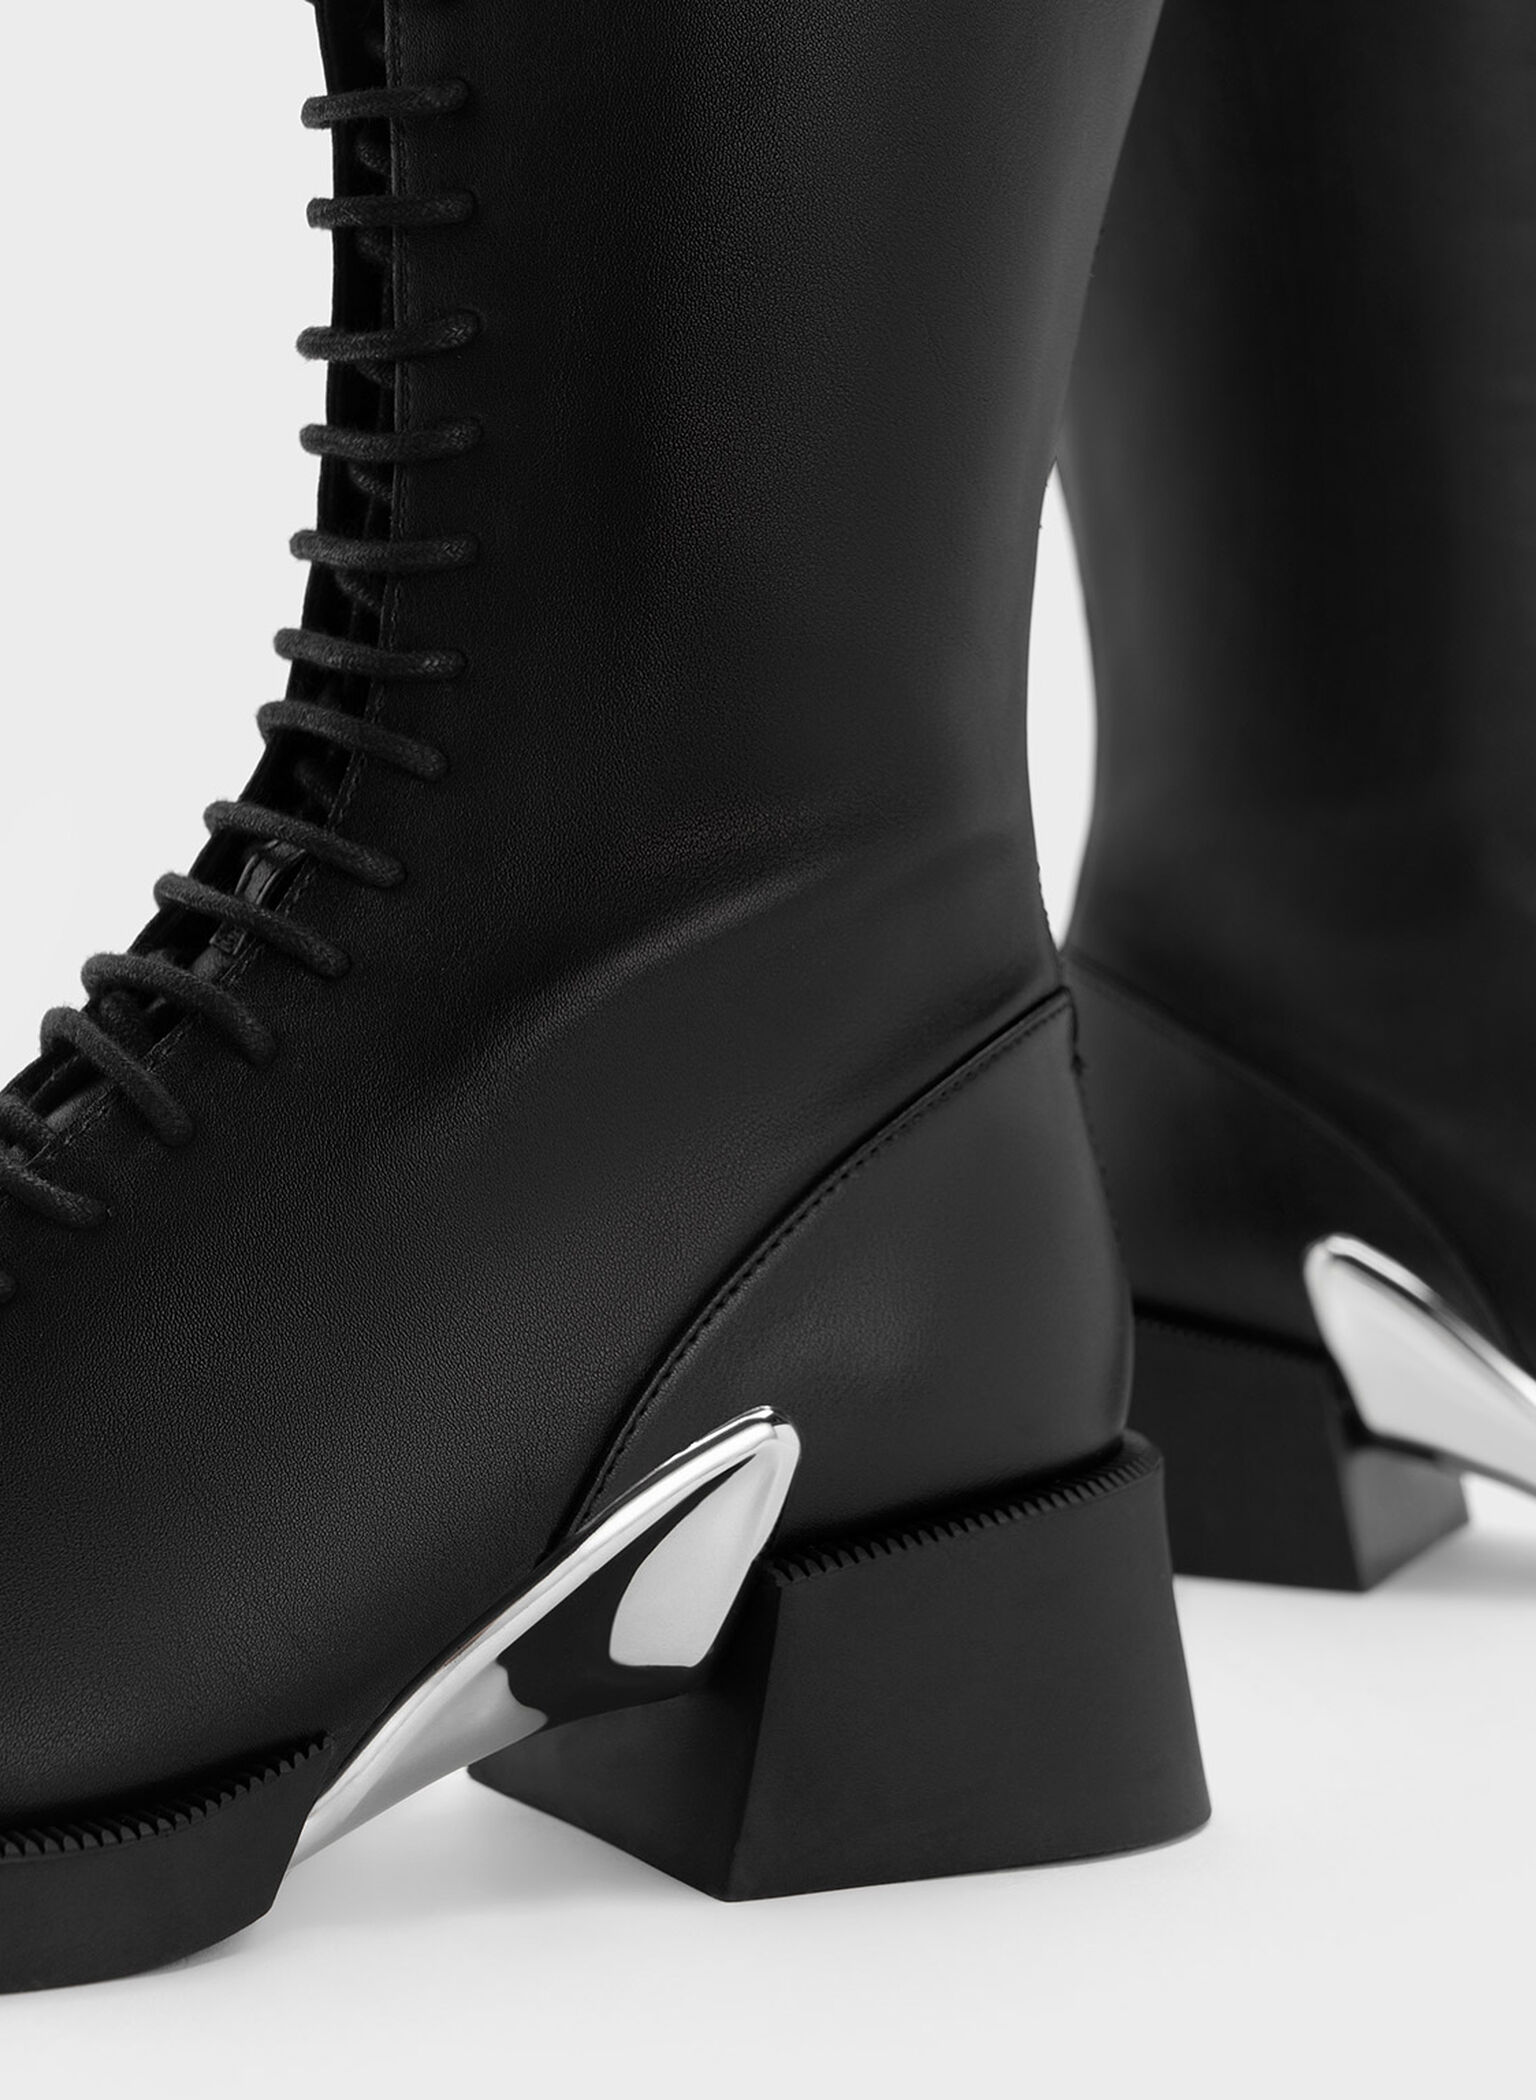 Devon Metallic-Accent Lace-Up Knee-High Boots, Black, hi-res